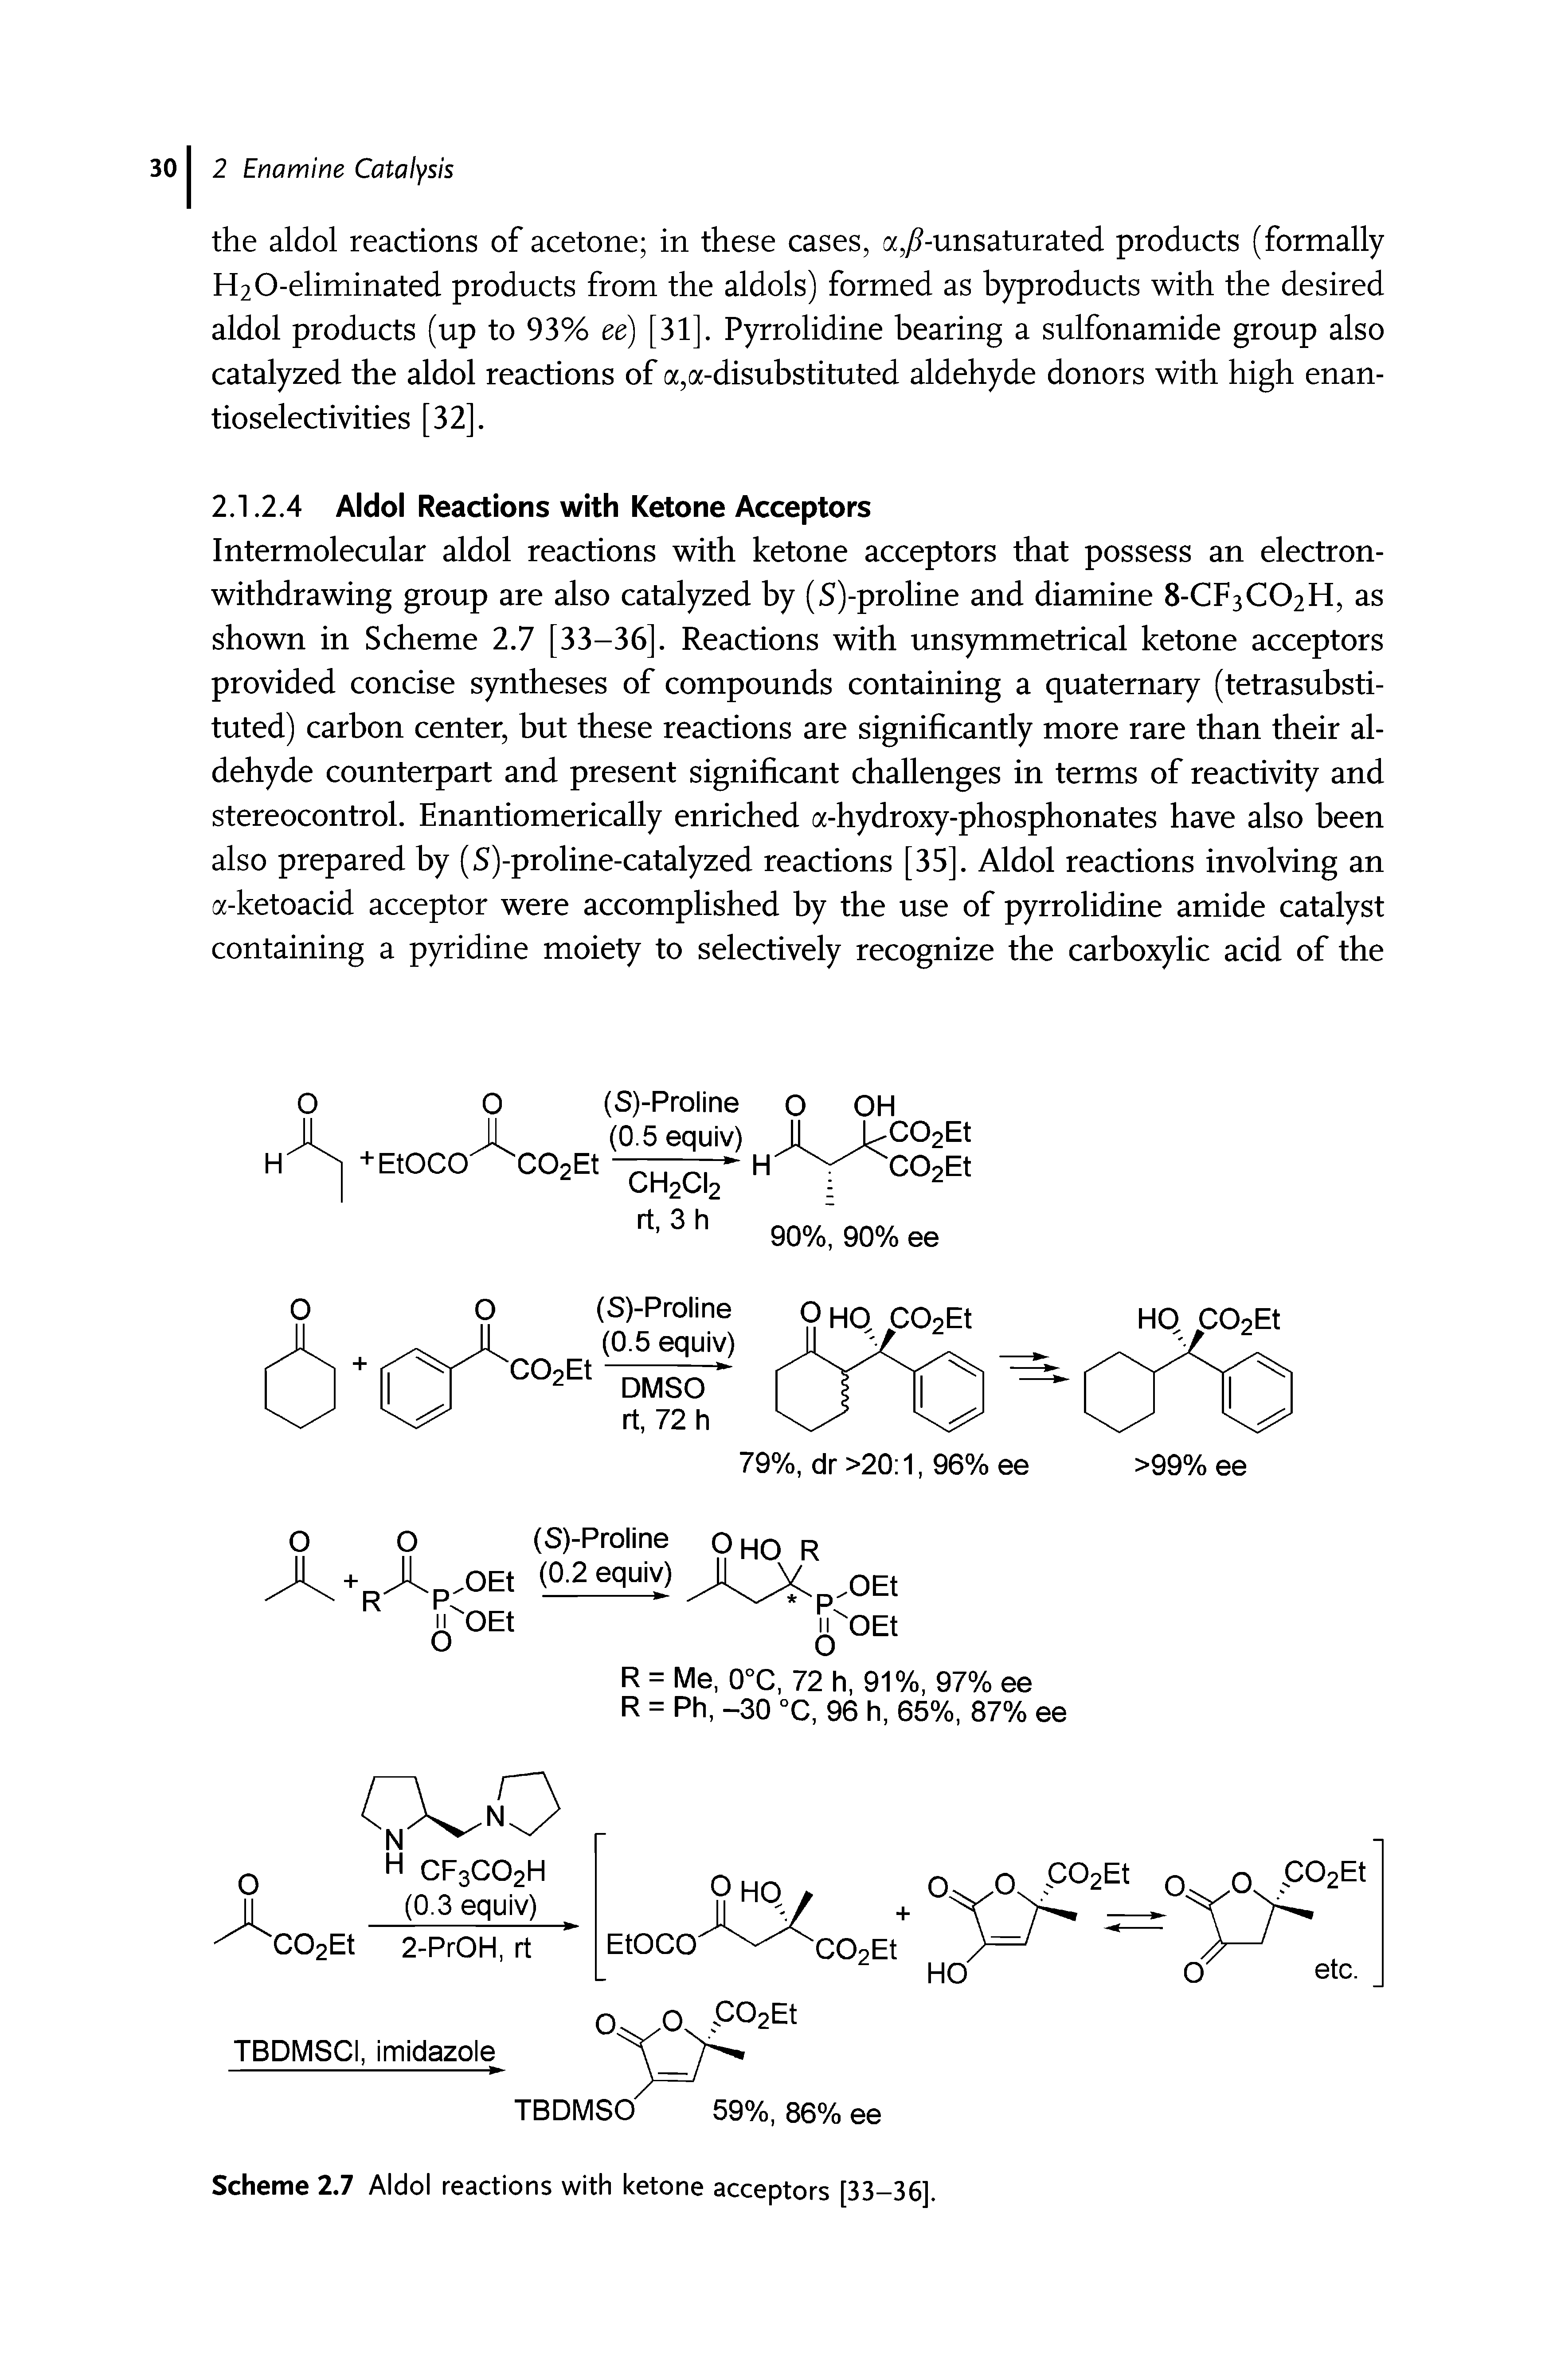 Scheme 2.7 Aldol reactions with ketone acceptors [33-36].